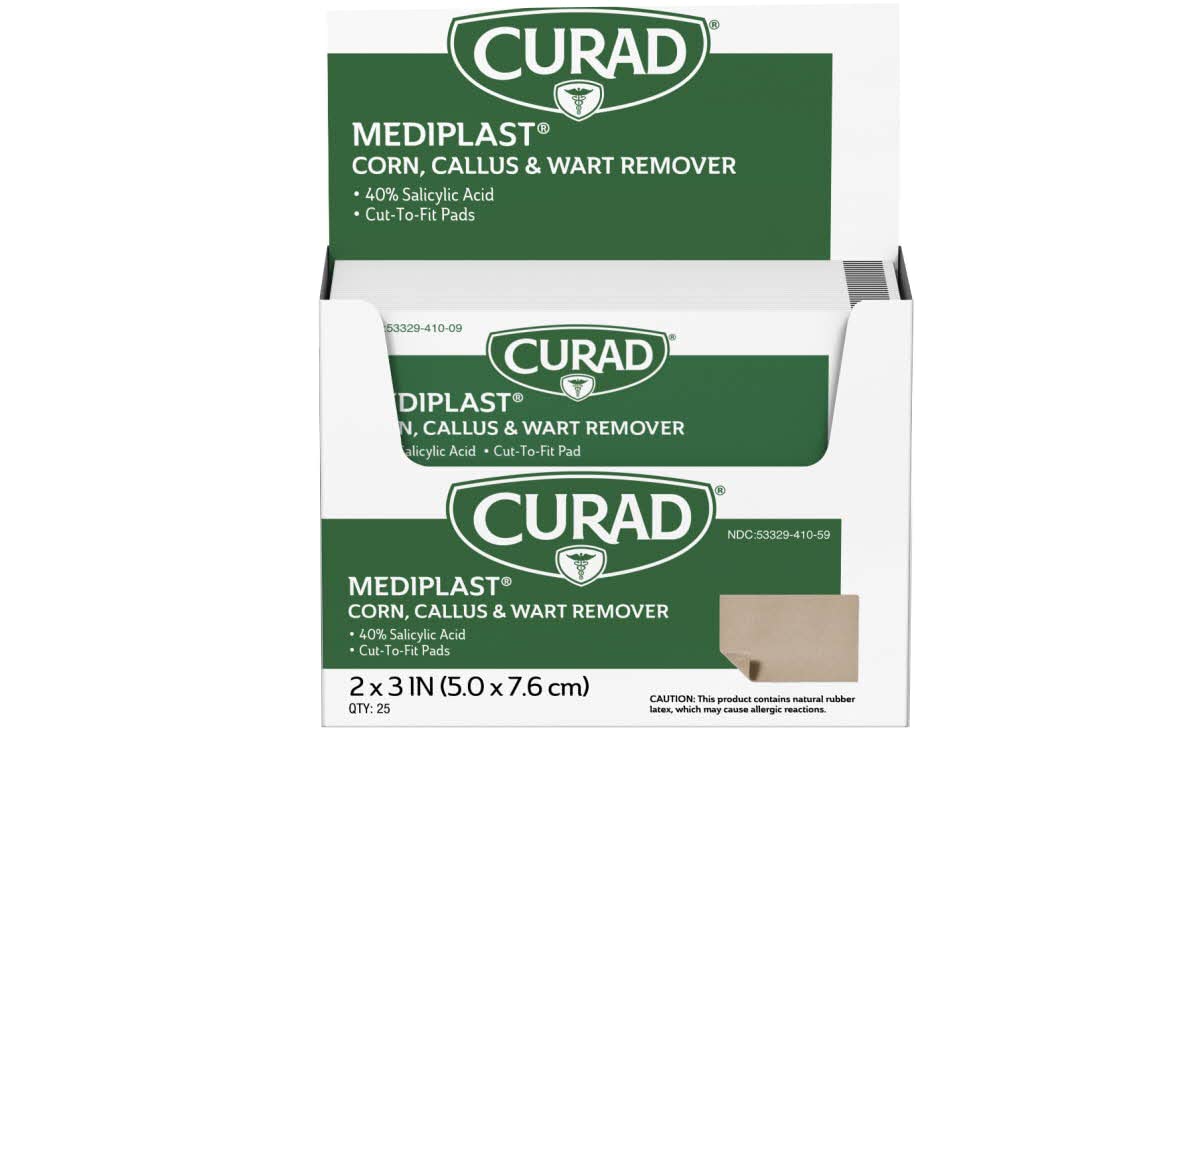 Curad Mediplast Corn, Callus, & Wart Remover, 40% Salicylic Acid Pads for topical removal of corns, callus, or plantar warts (25